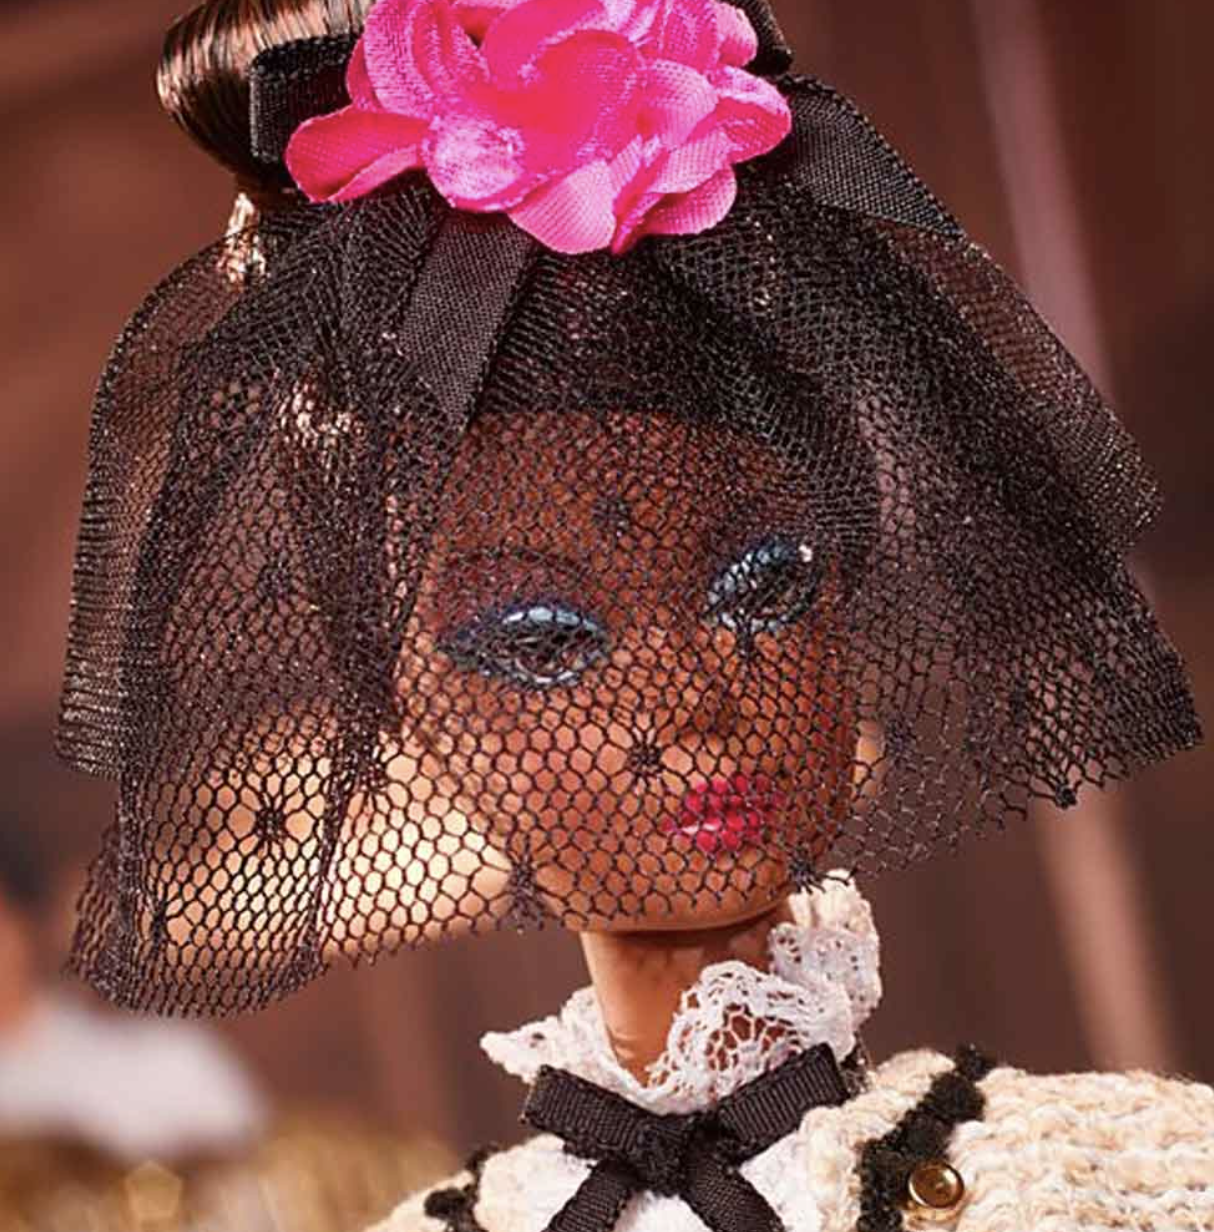 2020 Gold Label: Best To A Tea Silkstone Barbie Doll